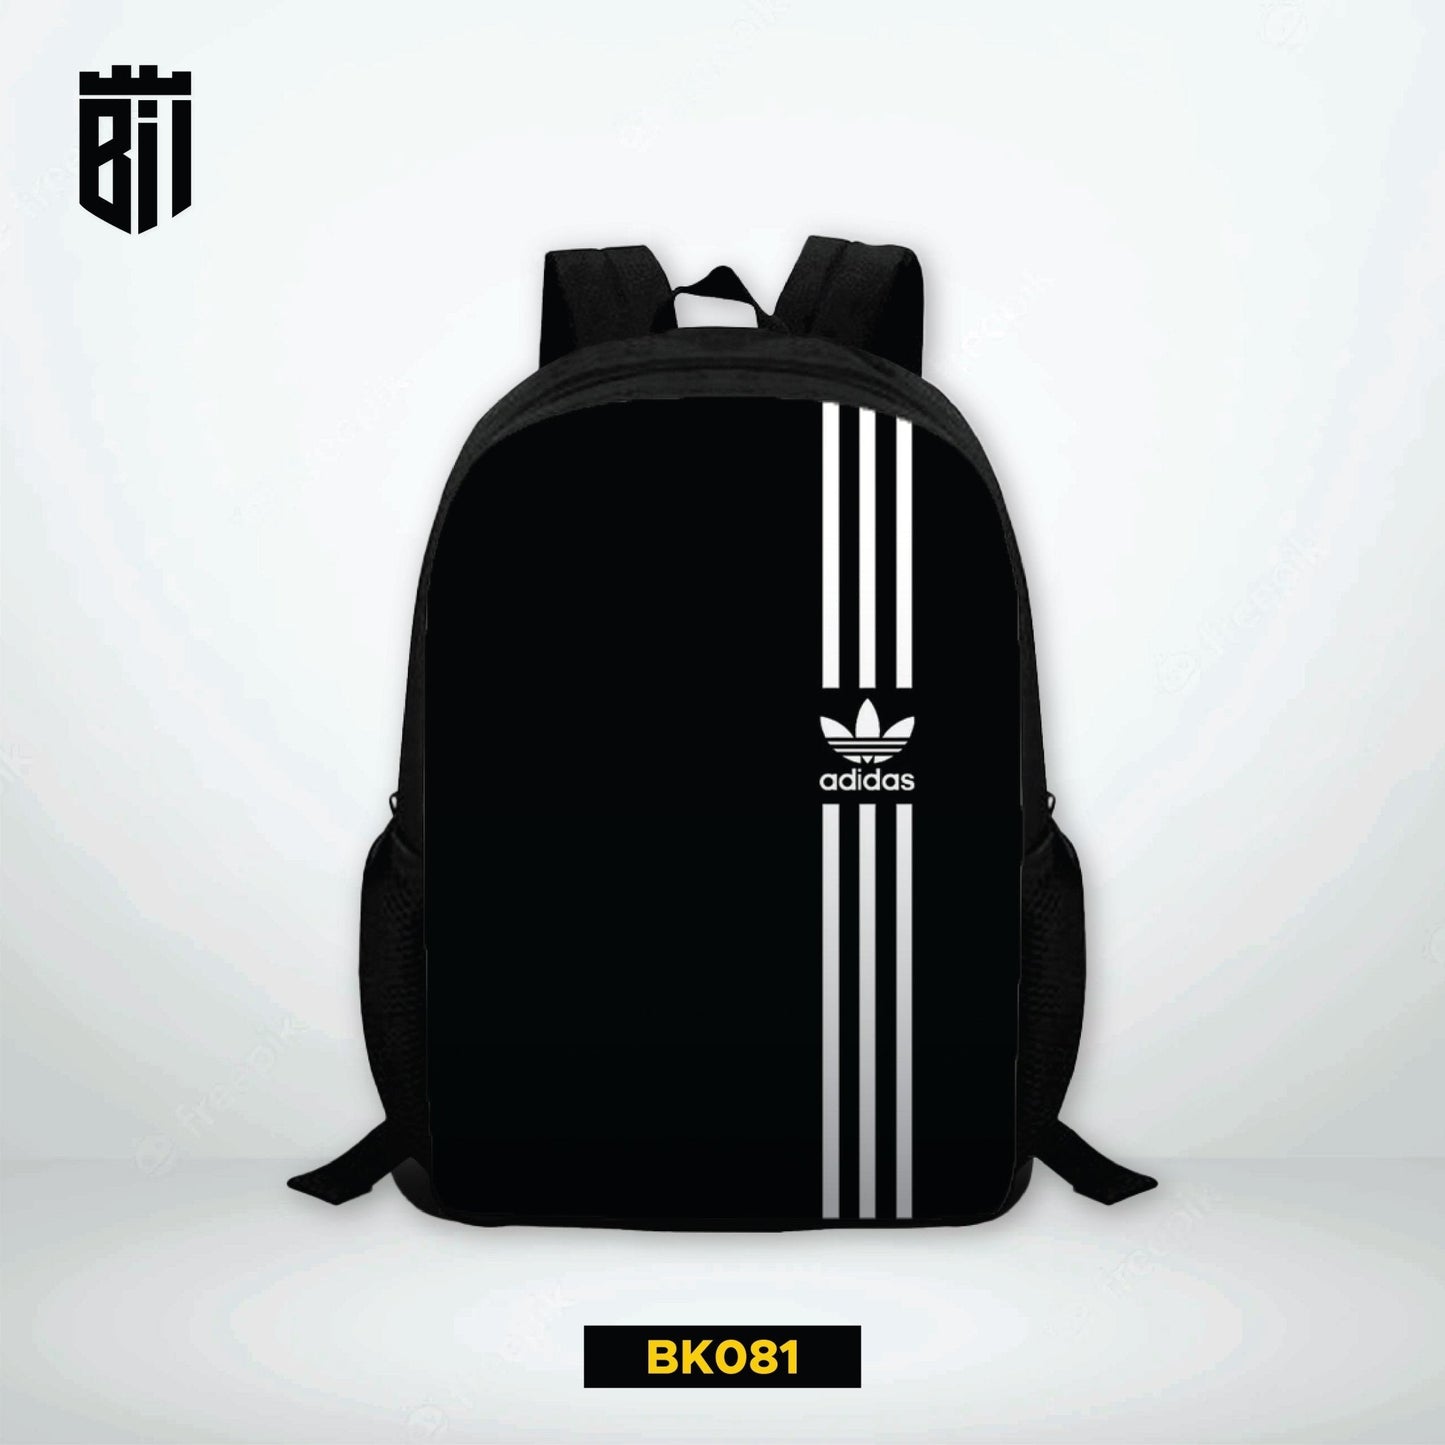 BK081 Adidas Backpack - BREACHIT